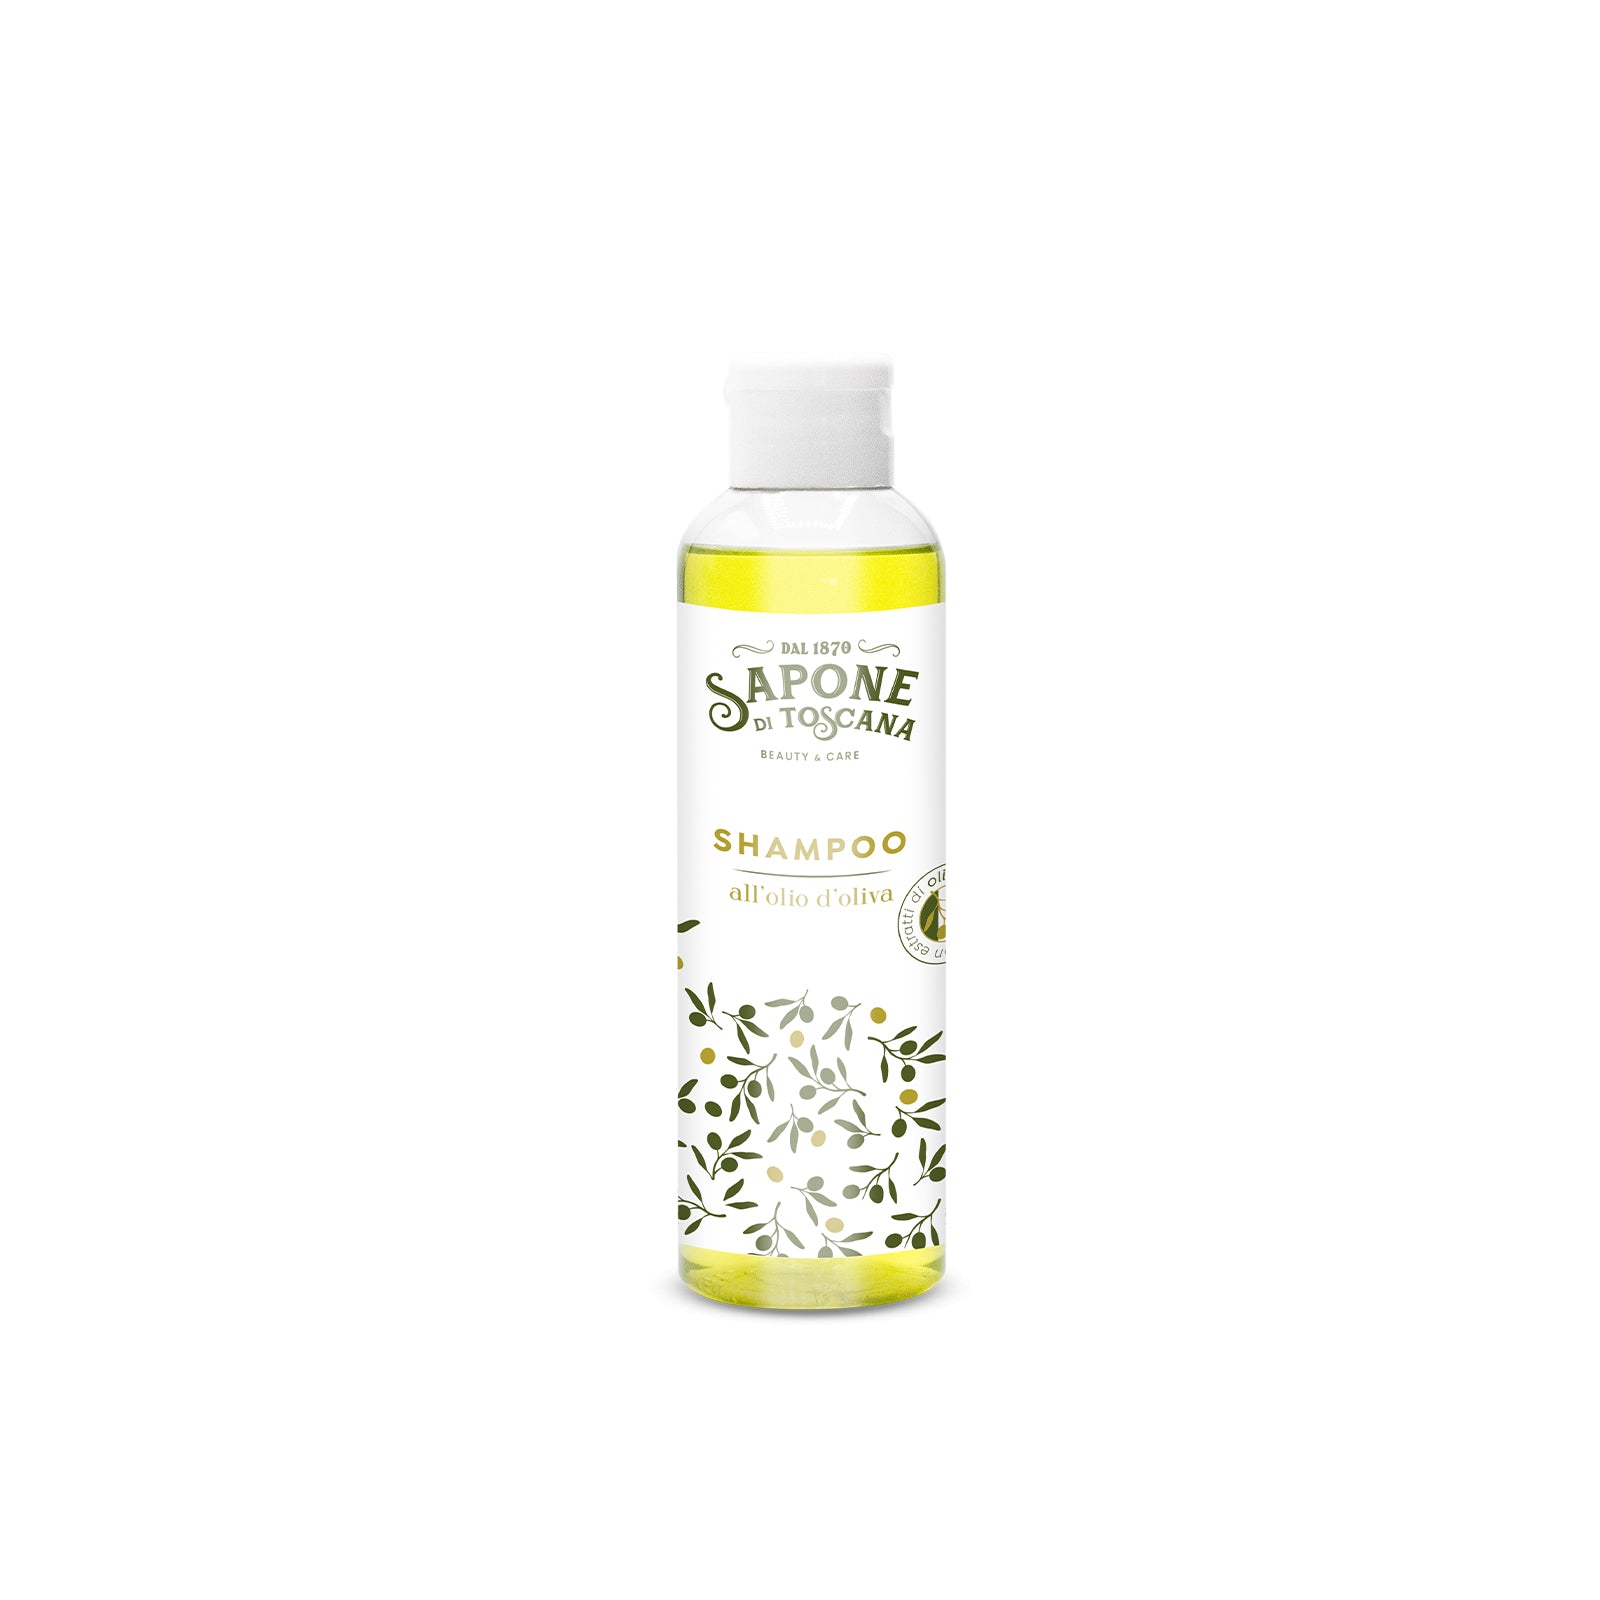 Shampoo - Olive oil